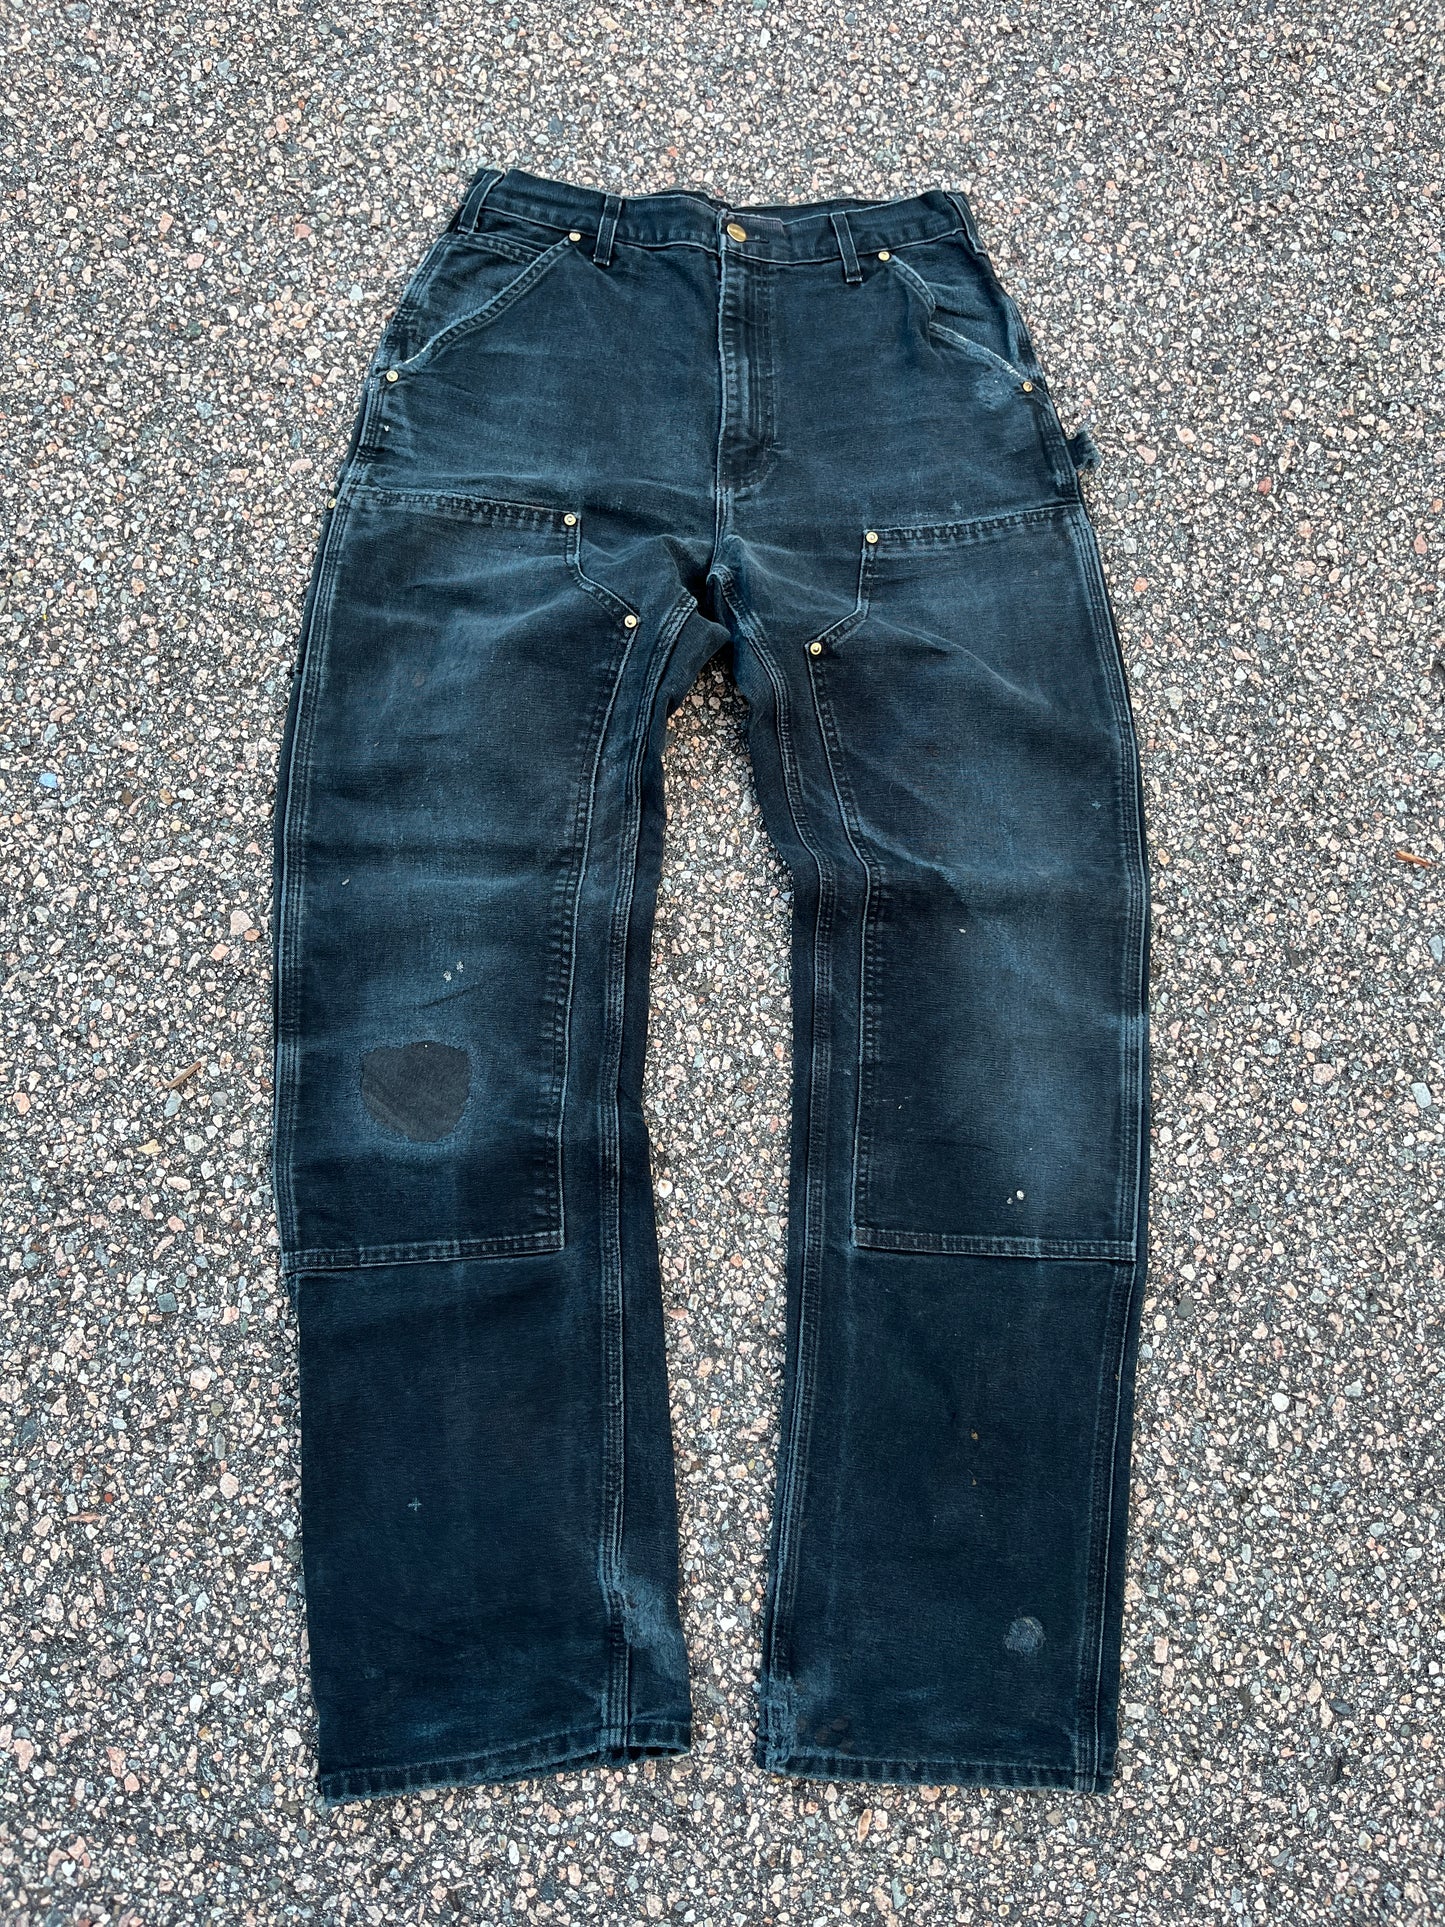 Faded Black Carhartt Double Knee Pants - 31 x 34